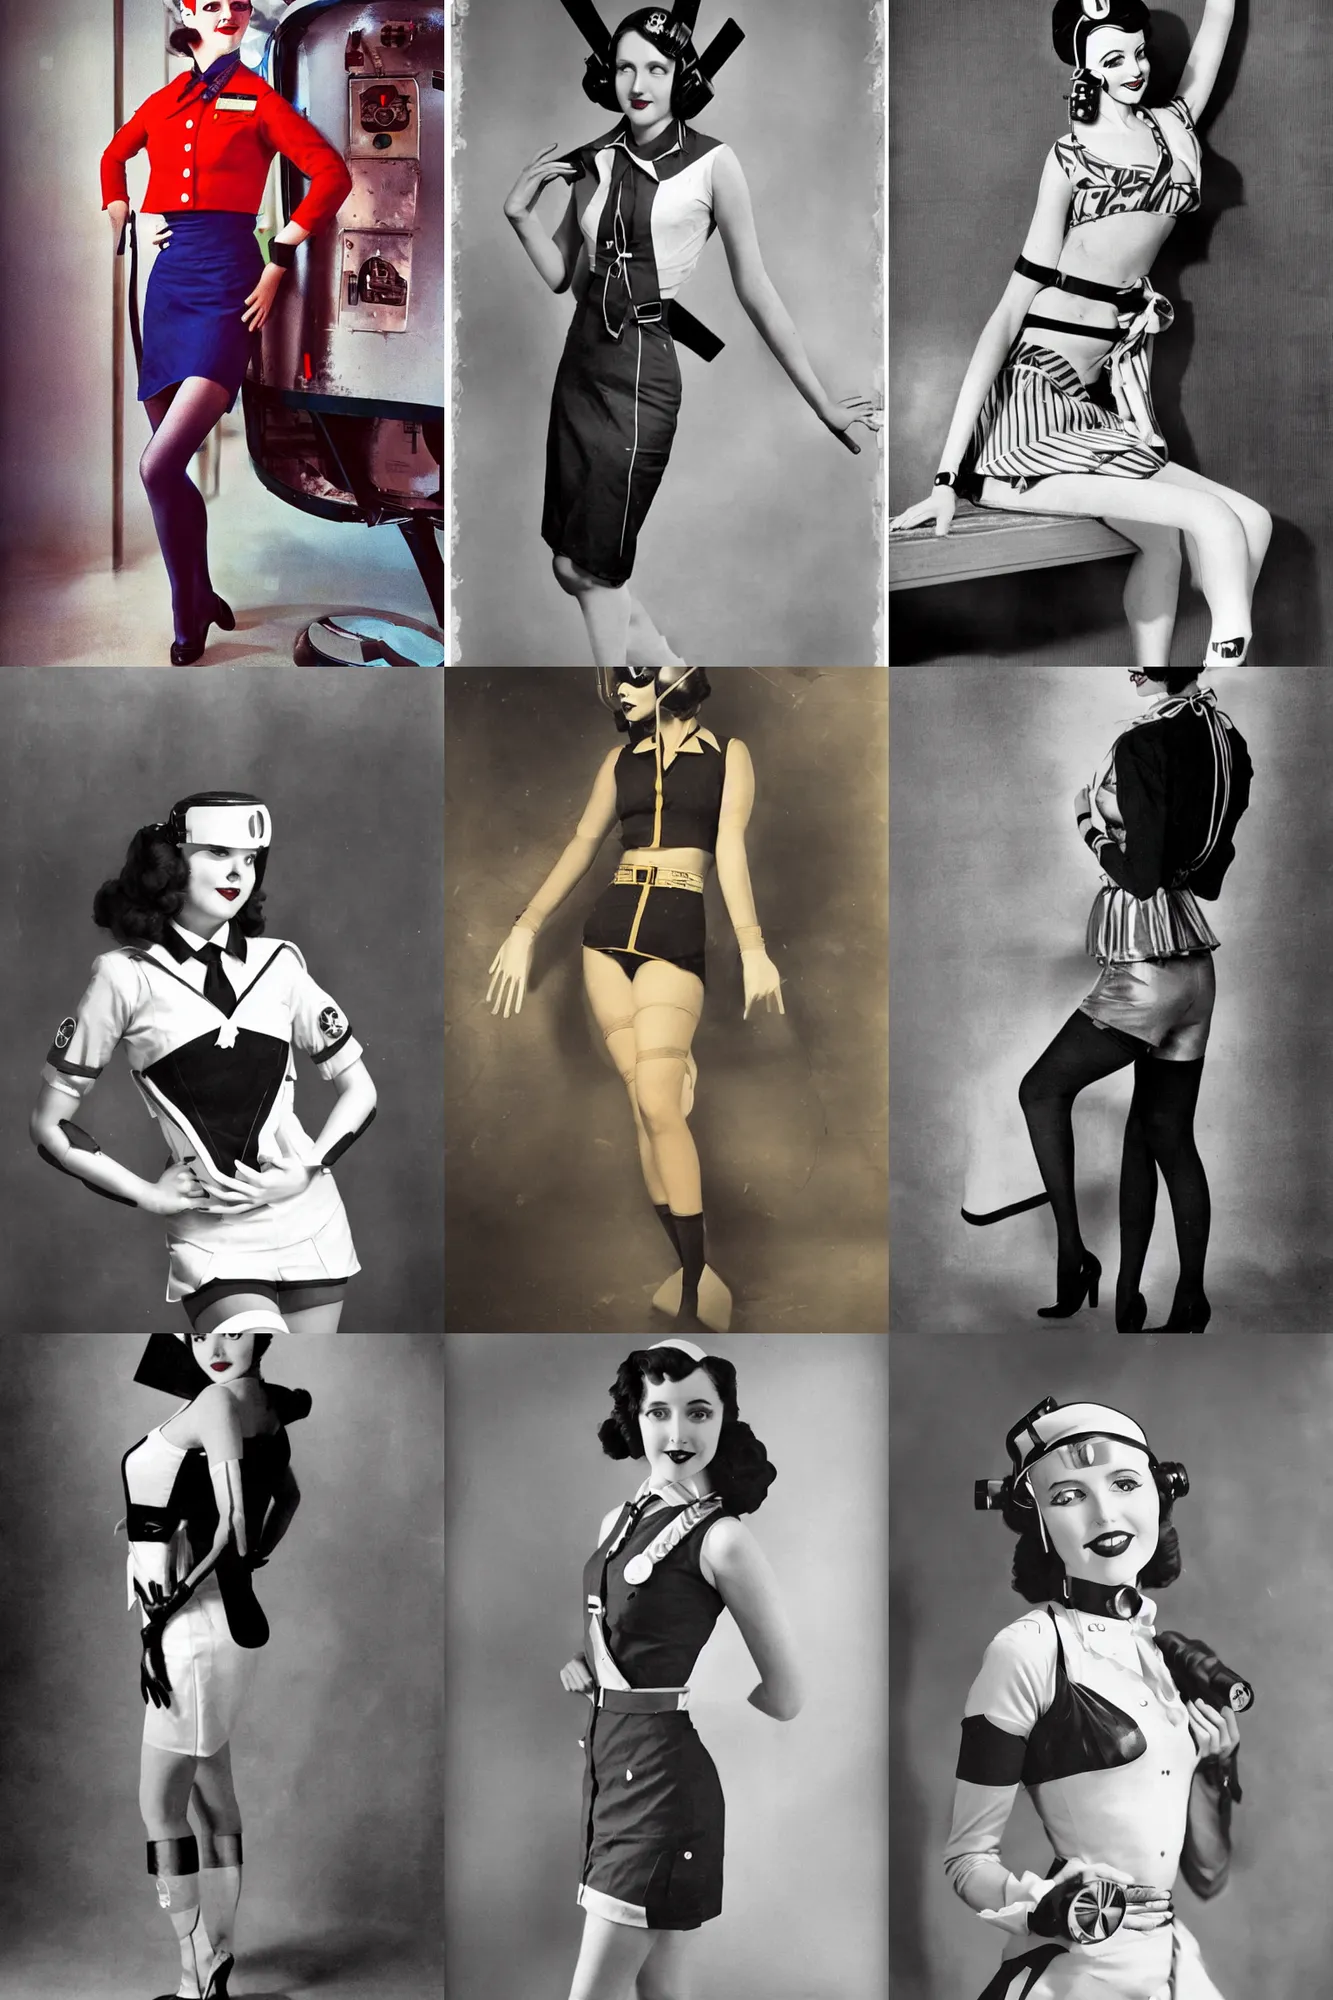 Prompt: beautiful photo of a stewardess Art Deco cyberpunk girl in a two-piece uniform